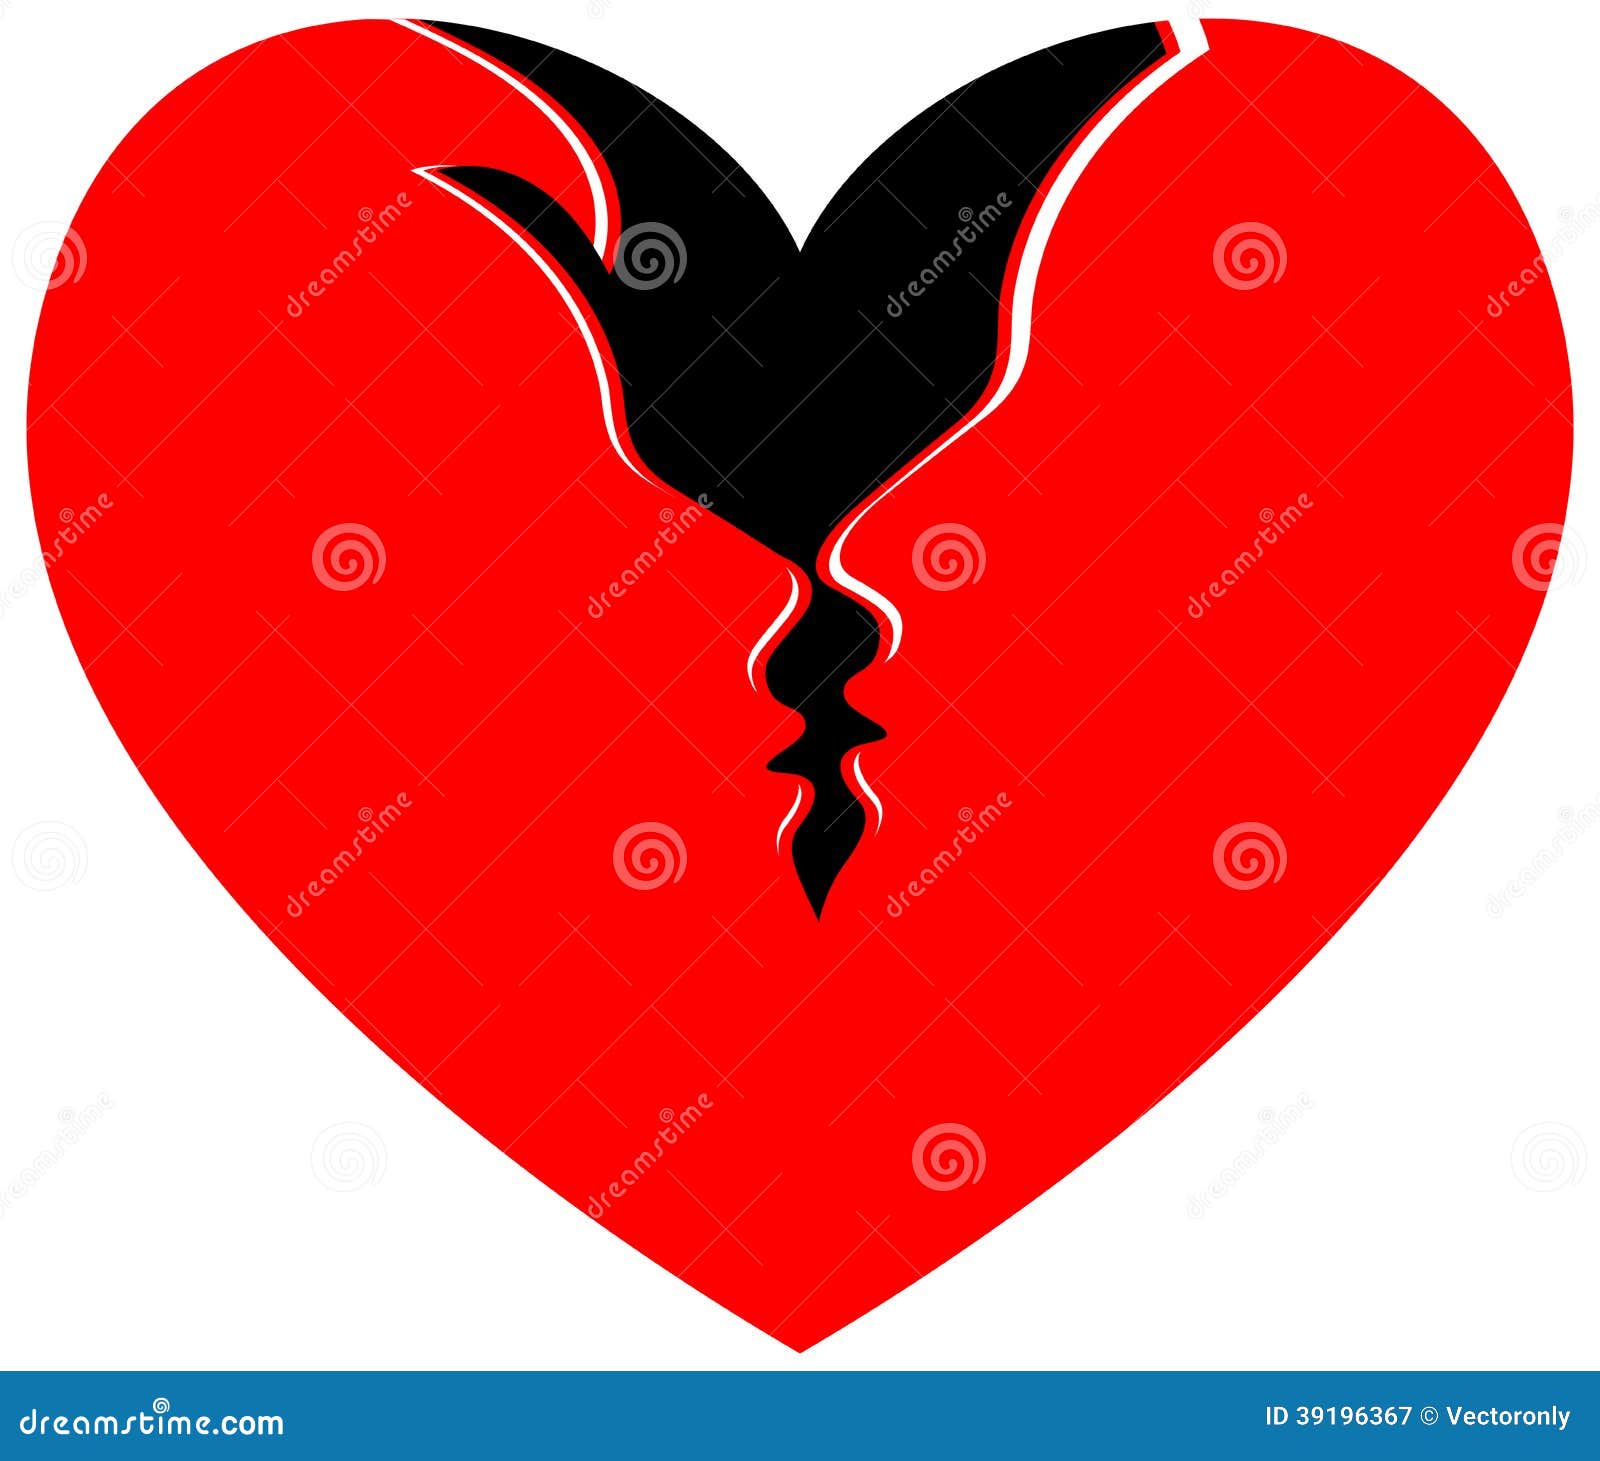 Heart couple stock vector. Illustration of heart, carrier - 39196367